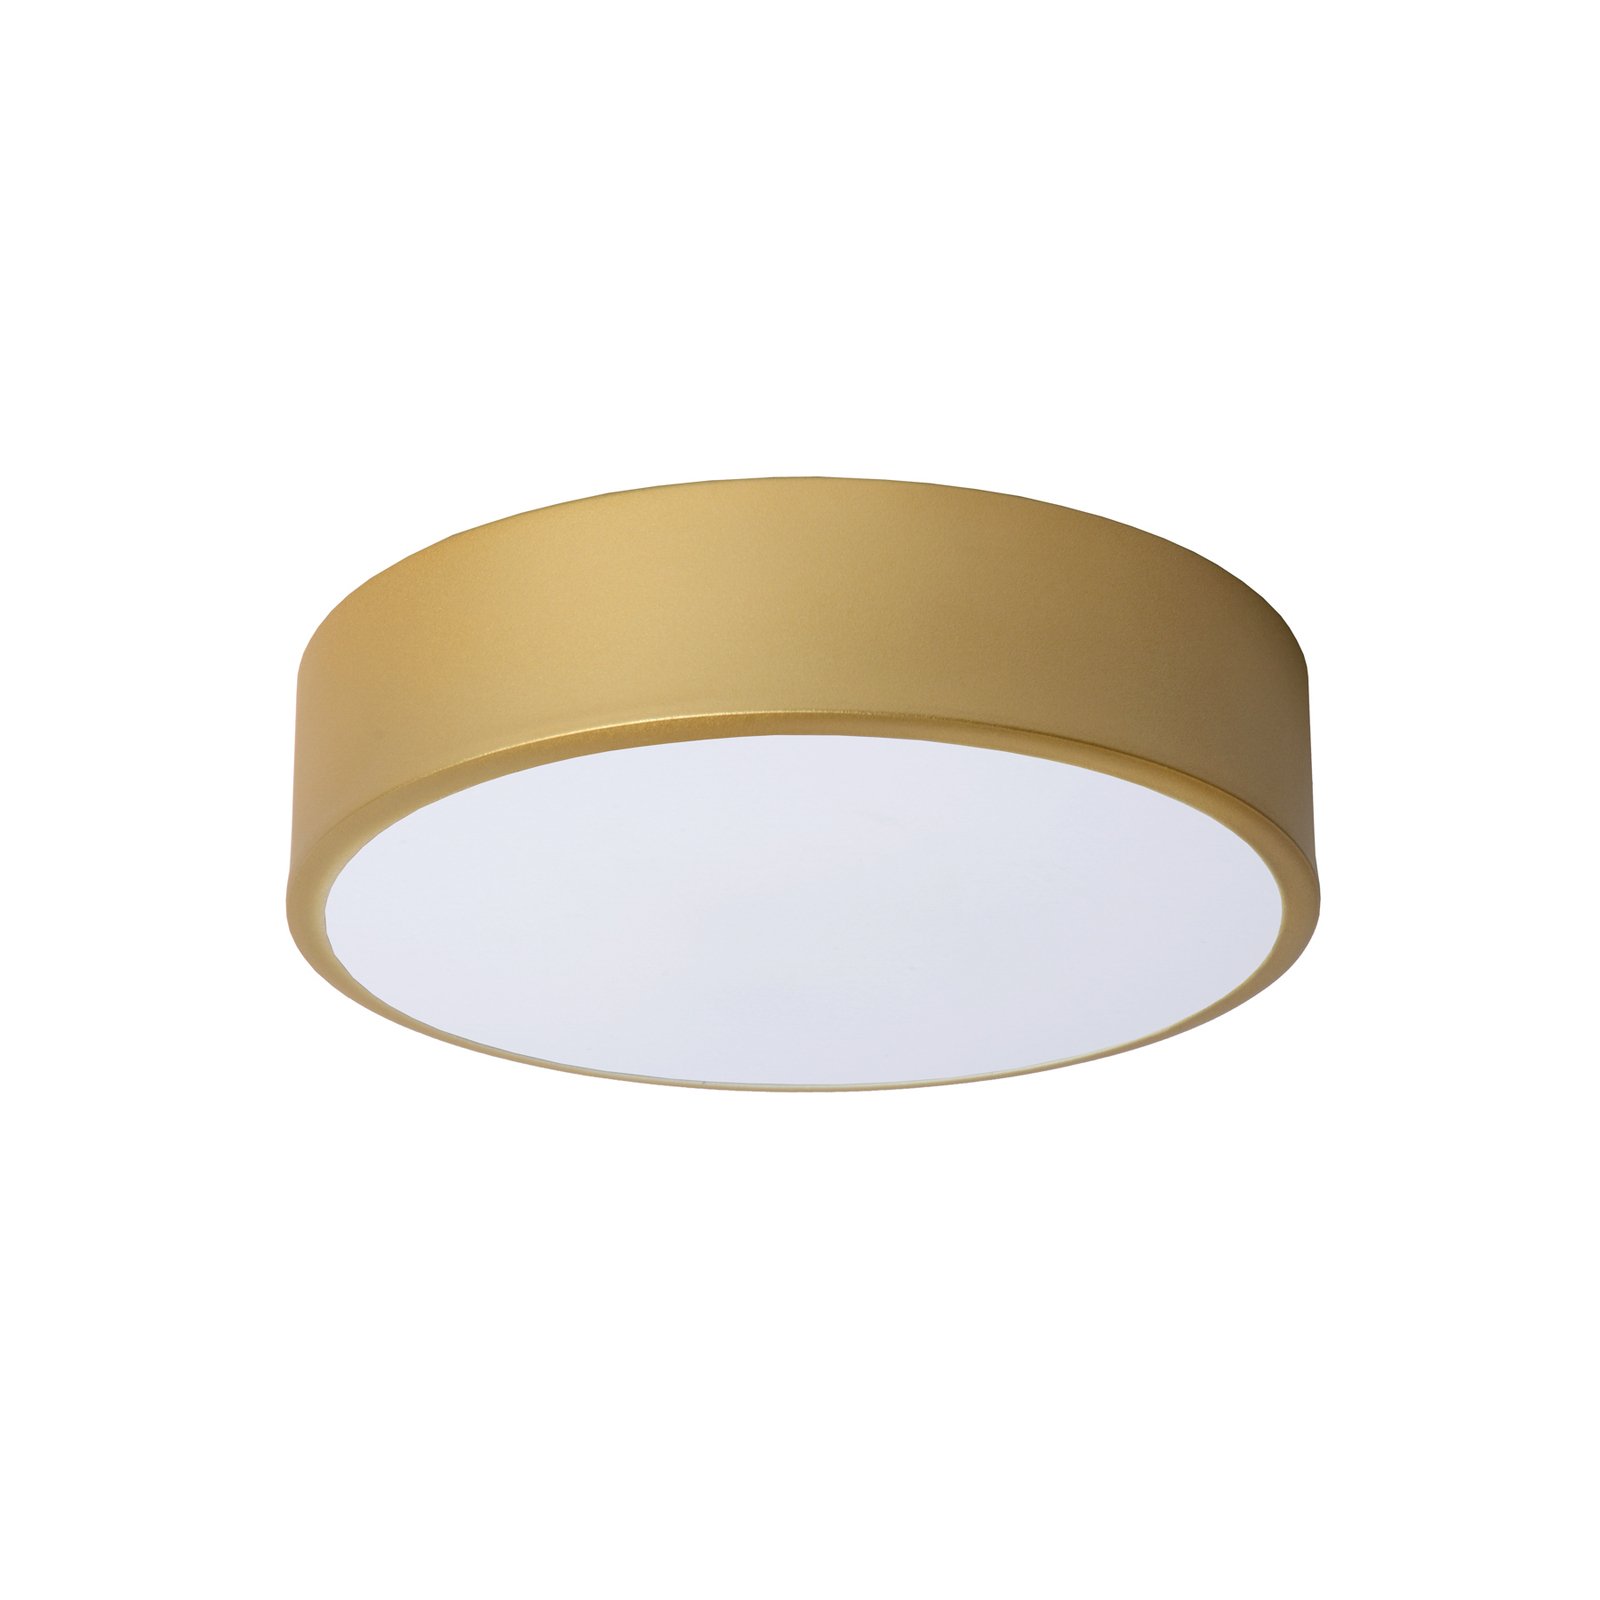 LED ceiling light Unar, gold matt, Ø 20 cm